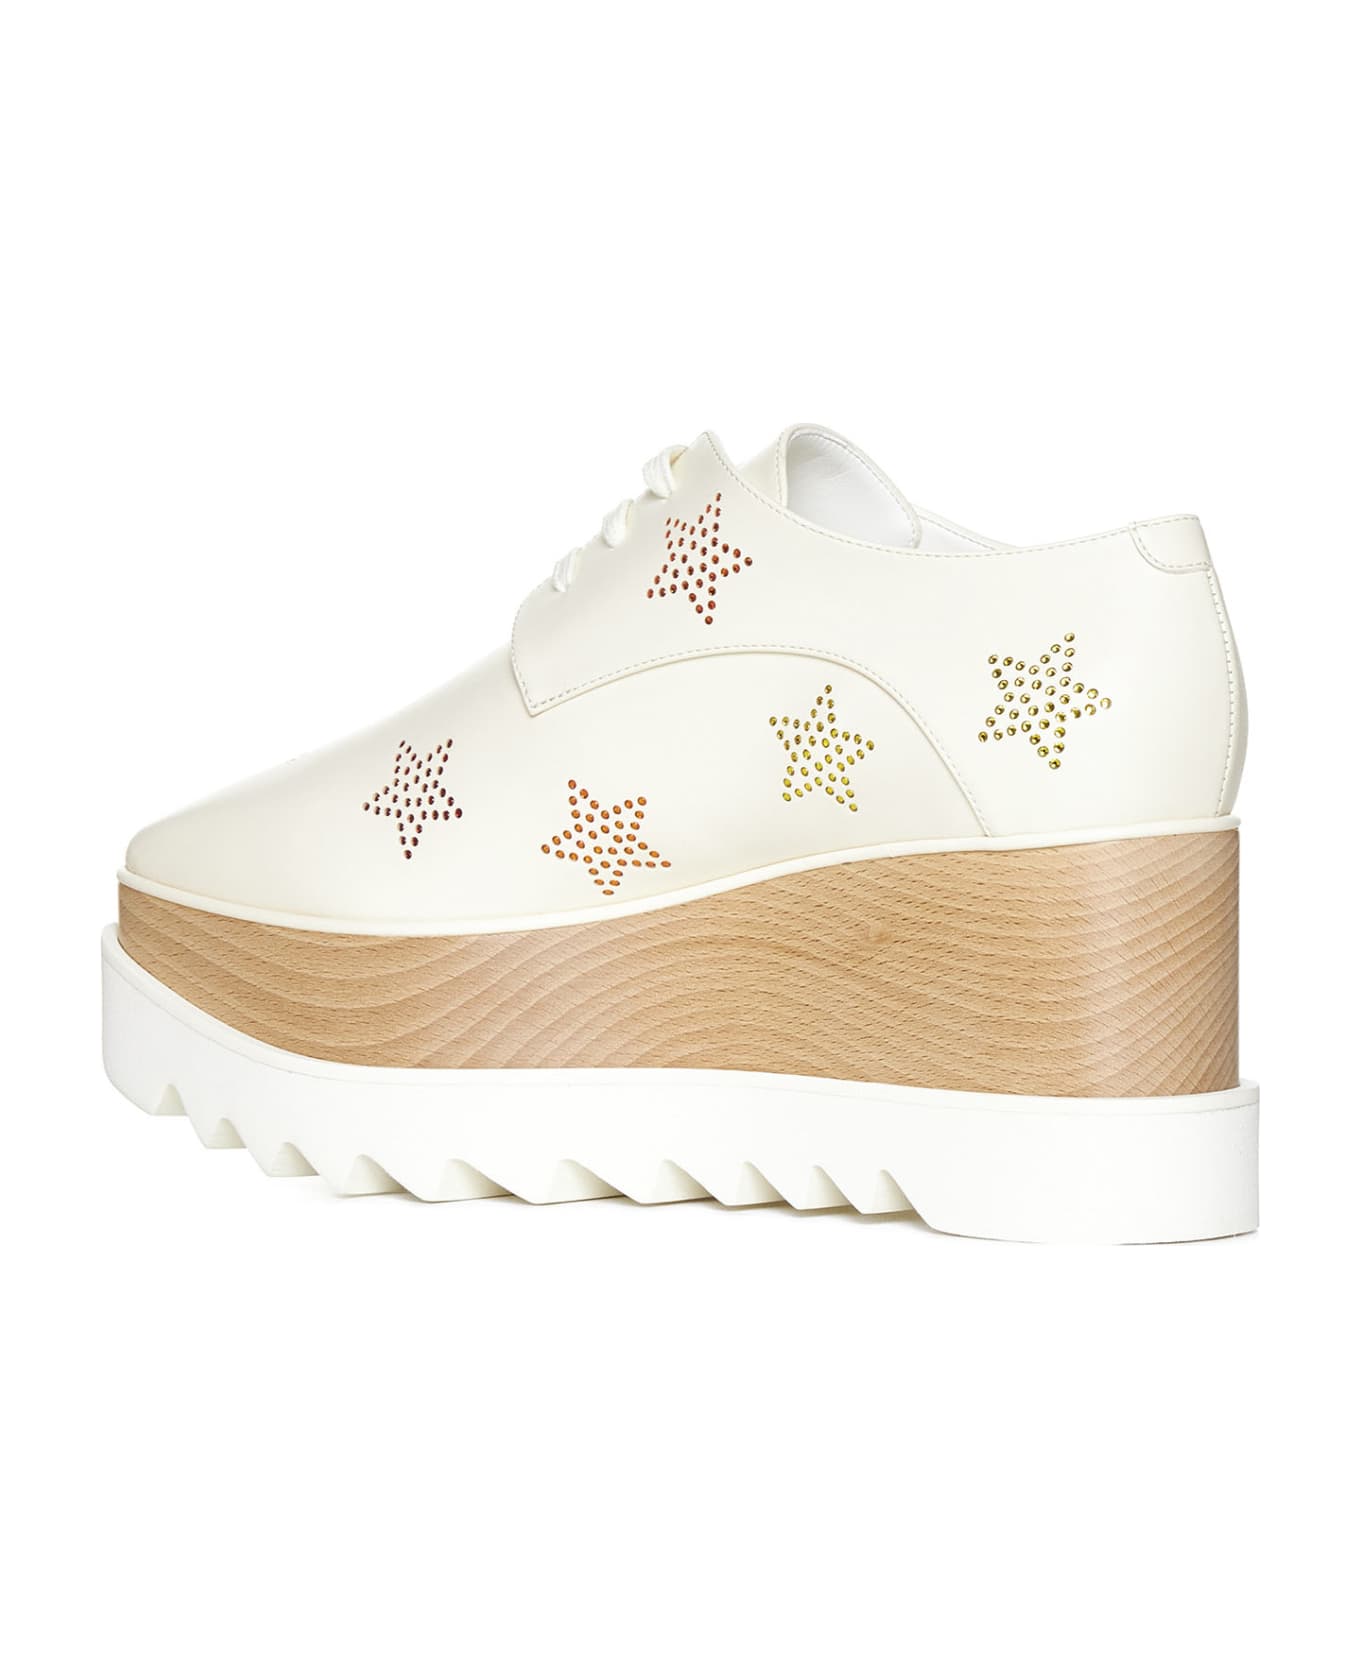 Stella McCartney Elyse Eco Sneakers - Cream multicolor ウェッジシューズ